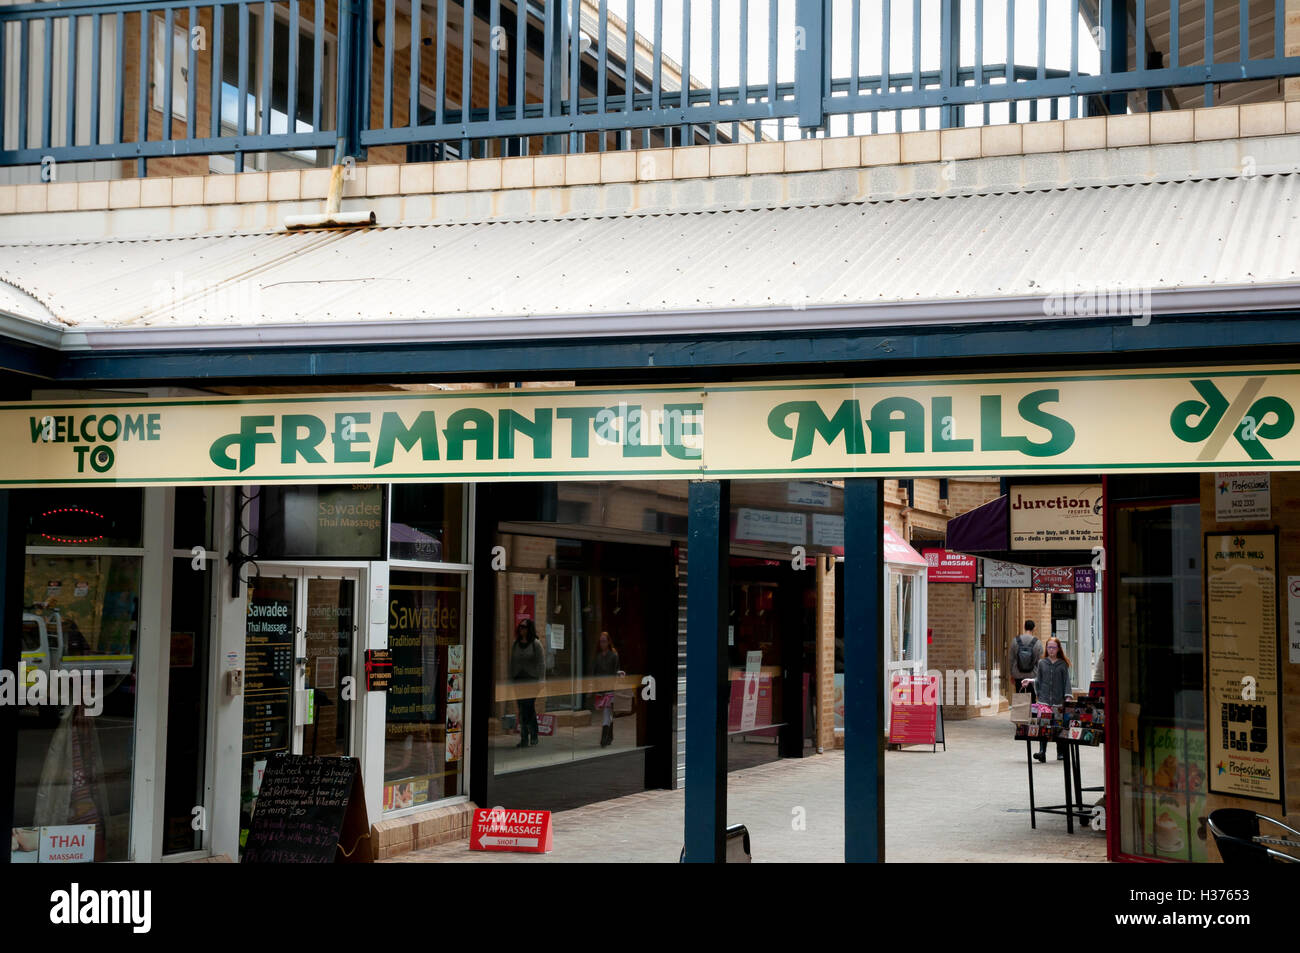 Fremantle Malls - Australien Stockfoto